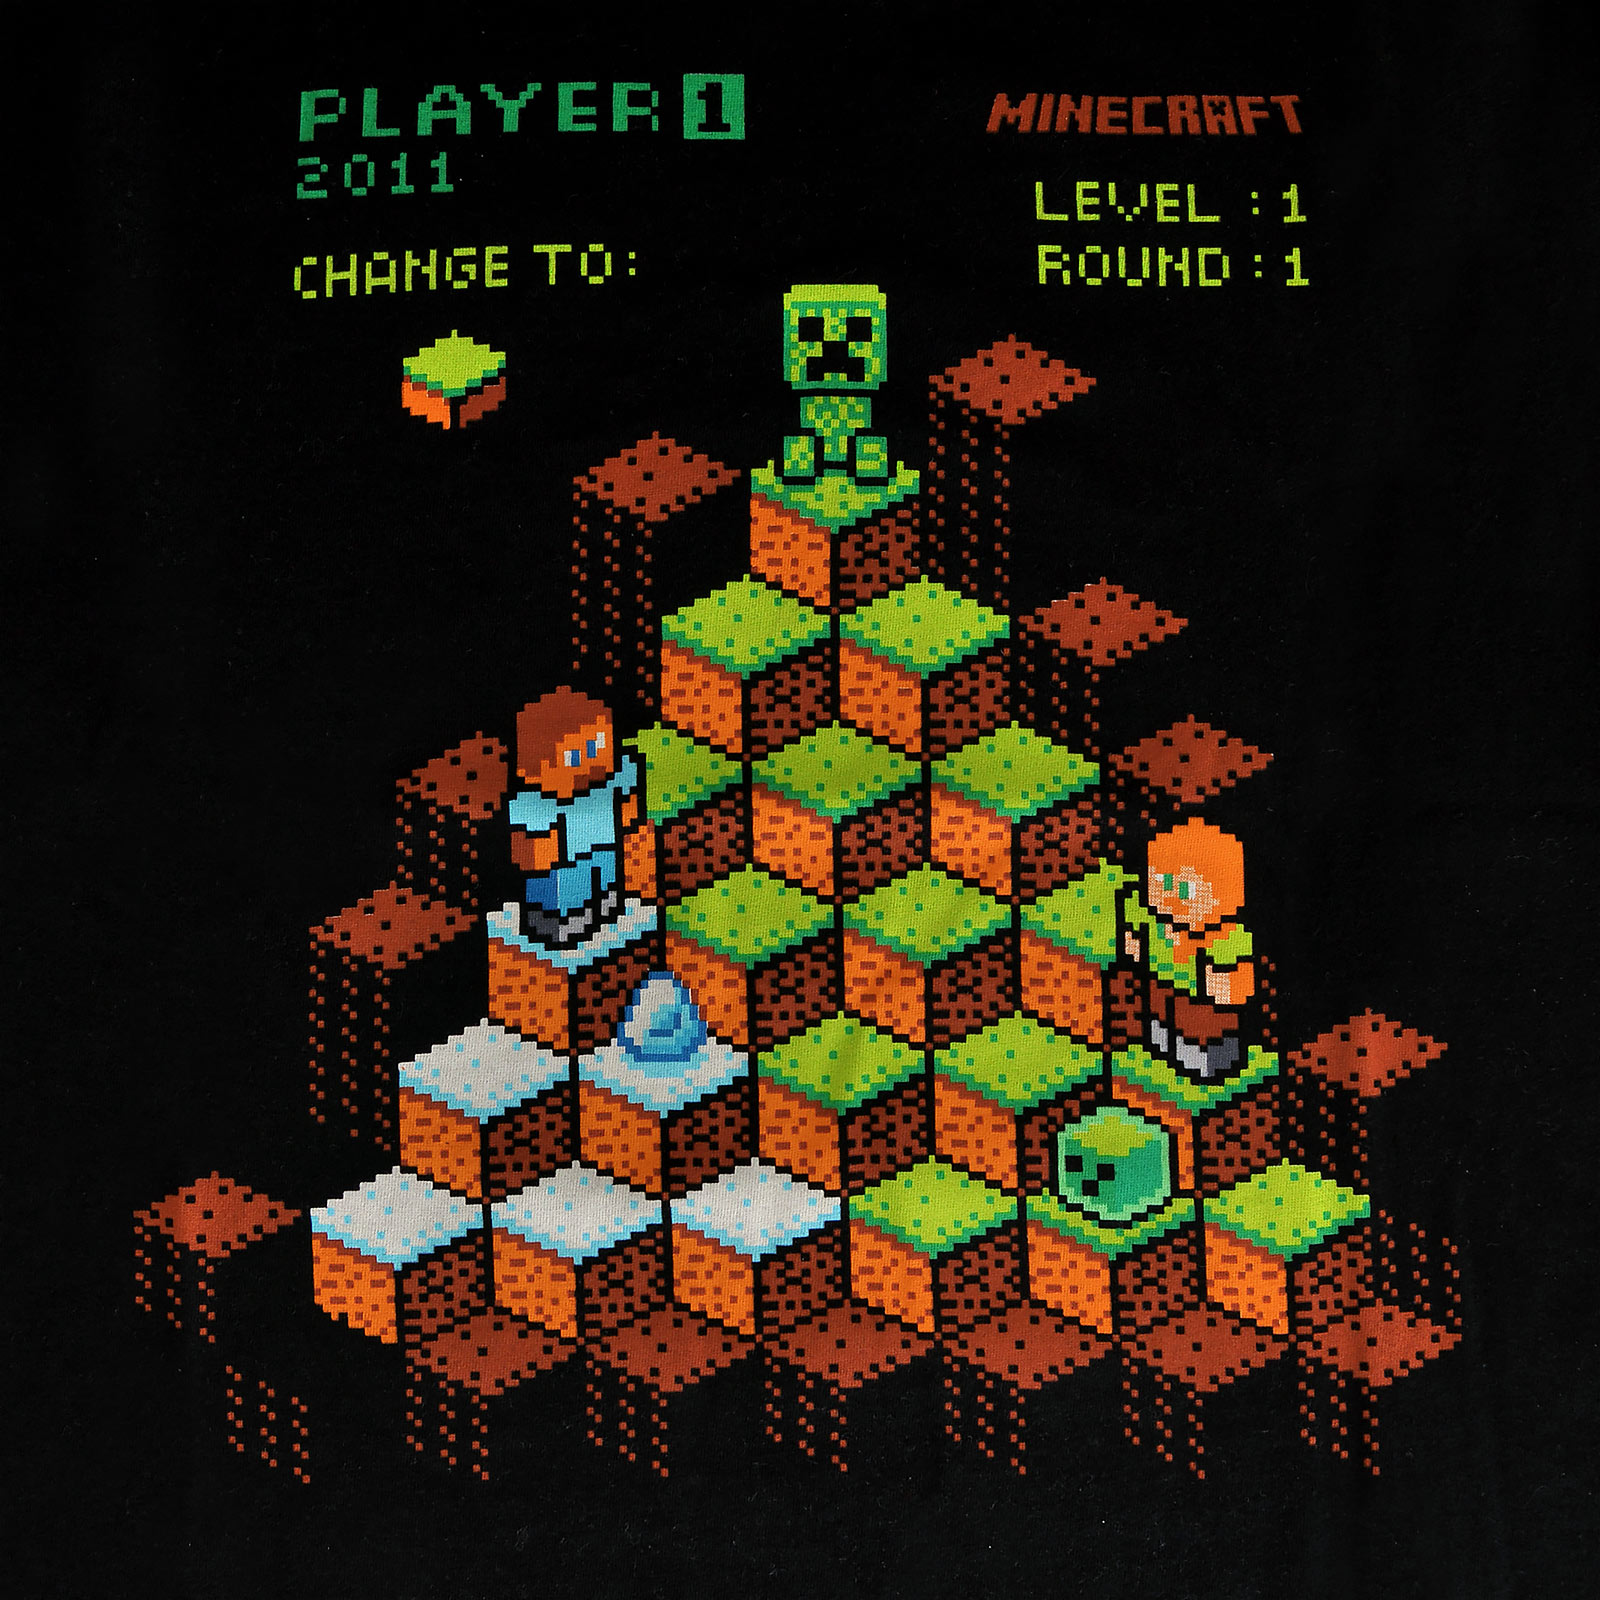 Minecraft - T-shirt rétro Miner Mountain noir